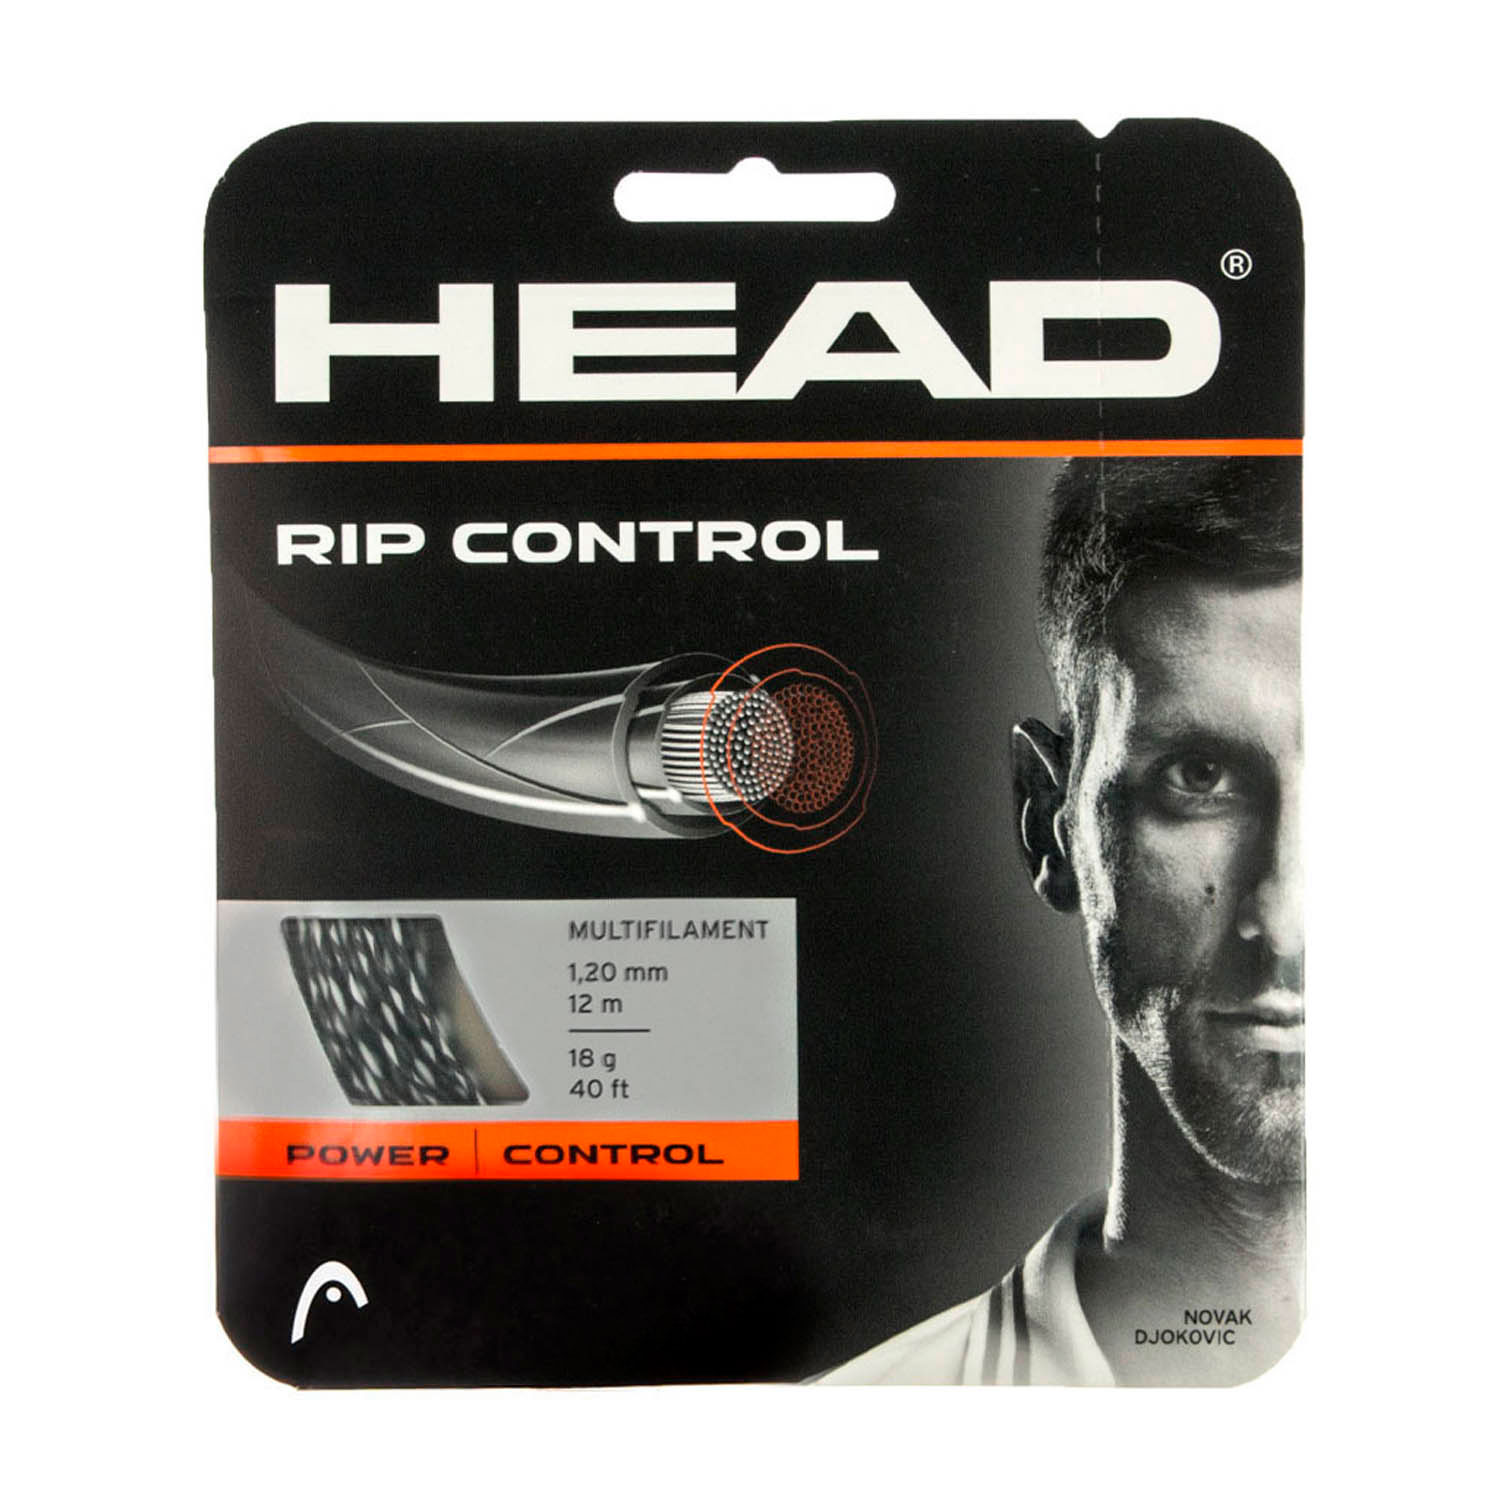 Head Rip Control 1.20 Set 12 m - Black/White